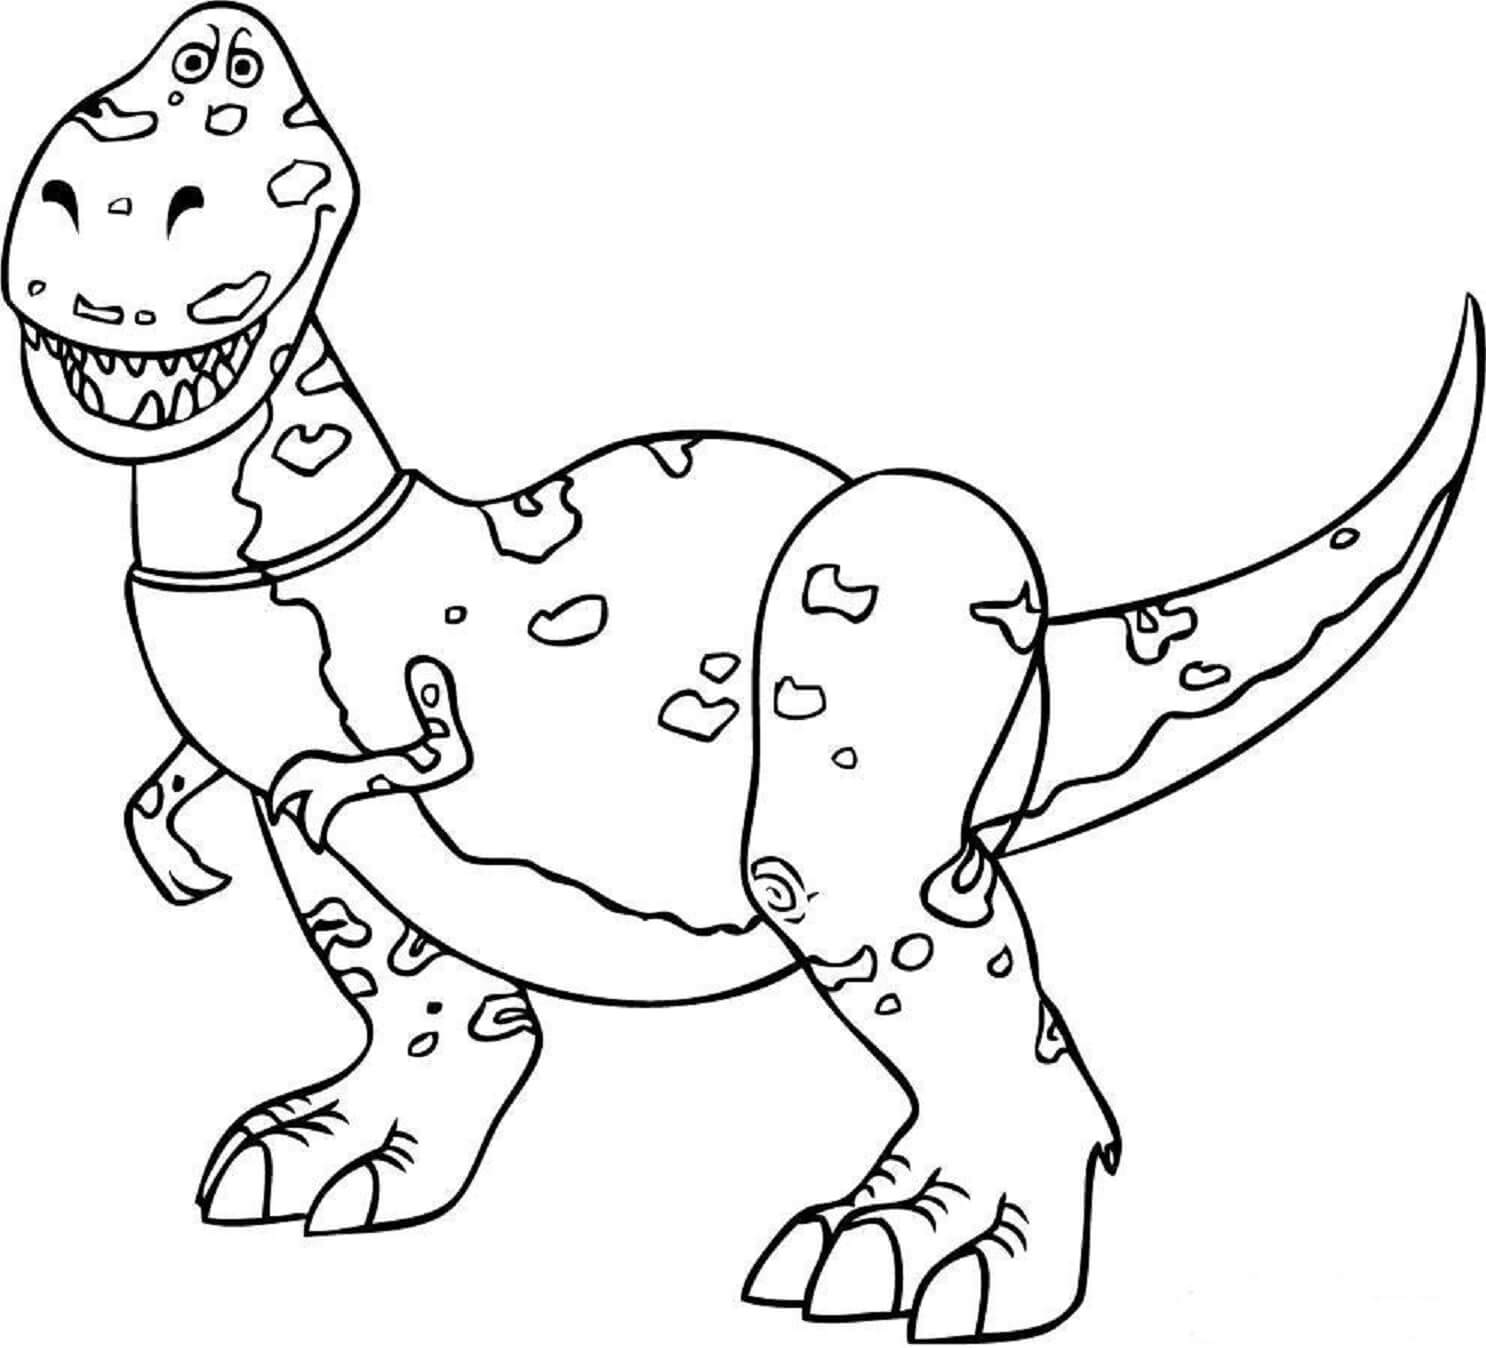 Dibujos de Impresionante Rex para colorear